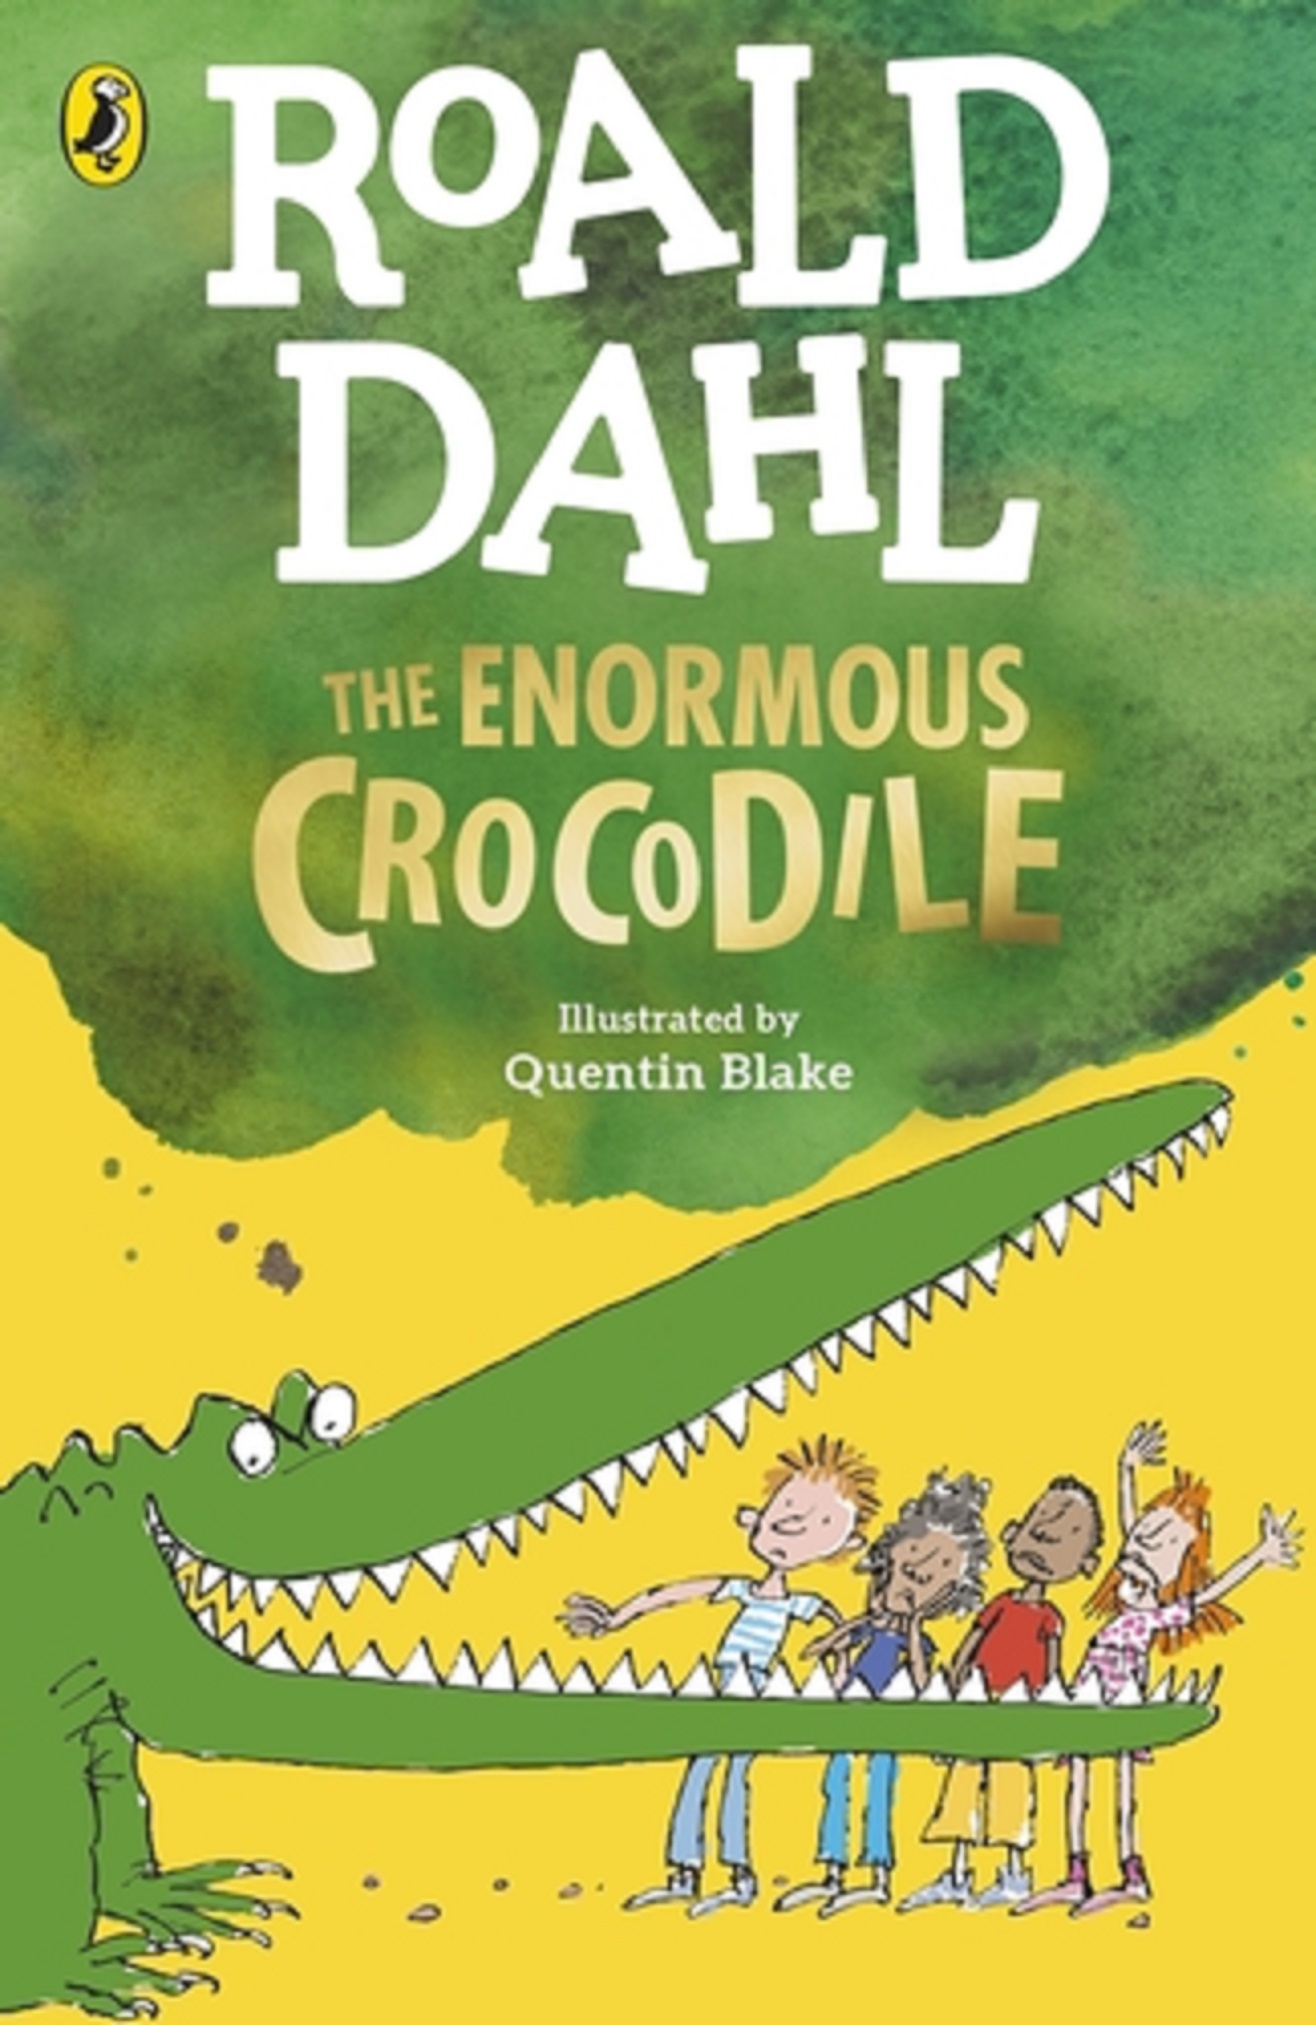 The Enormous Crocodile | Roald Dhal